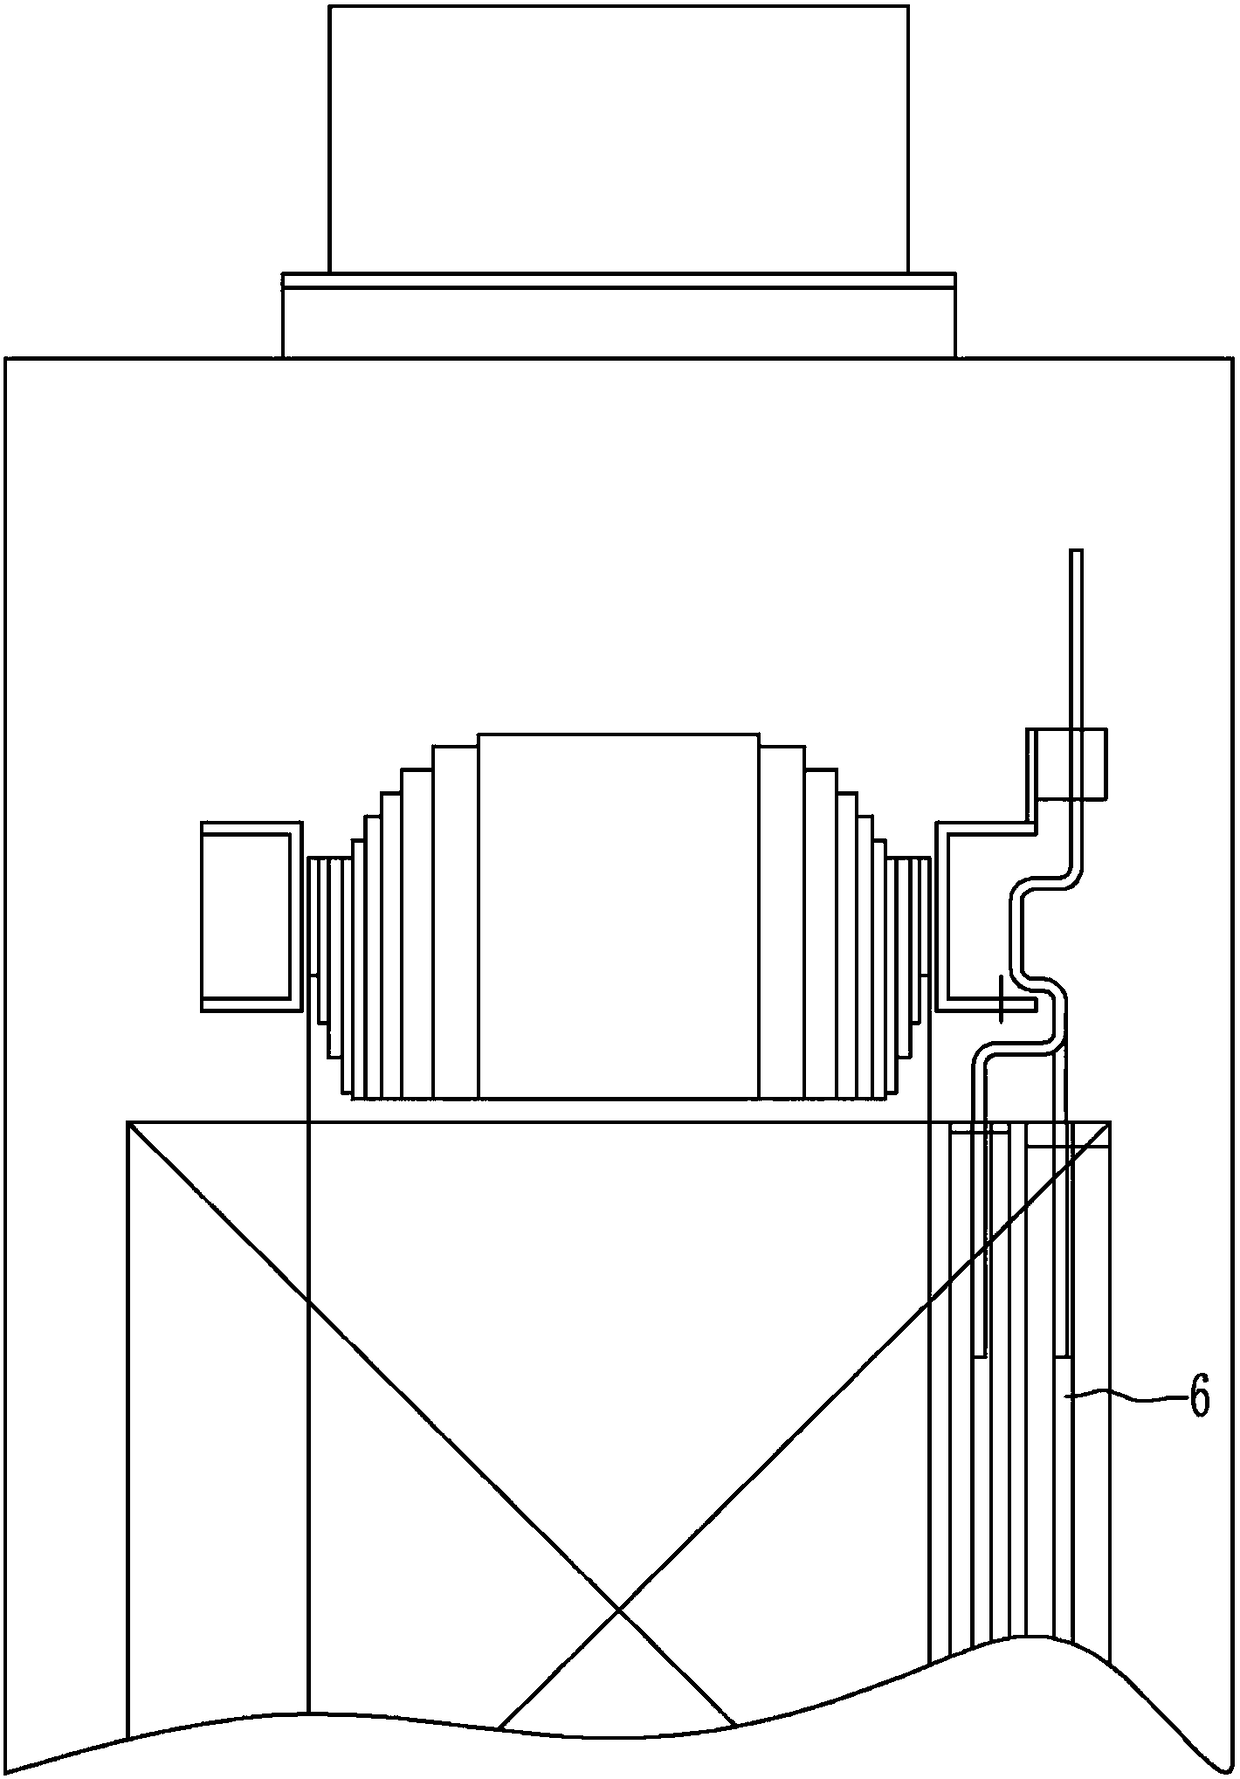 An Optical Fiber Temperature Measuring Structure for 10kv Distribution Transformer